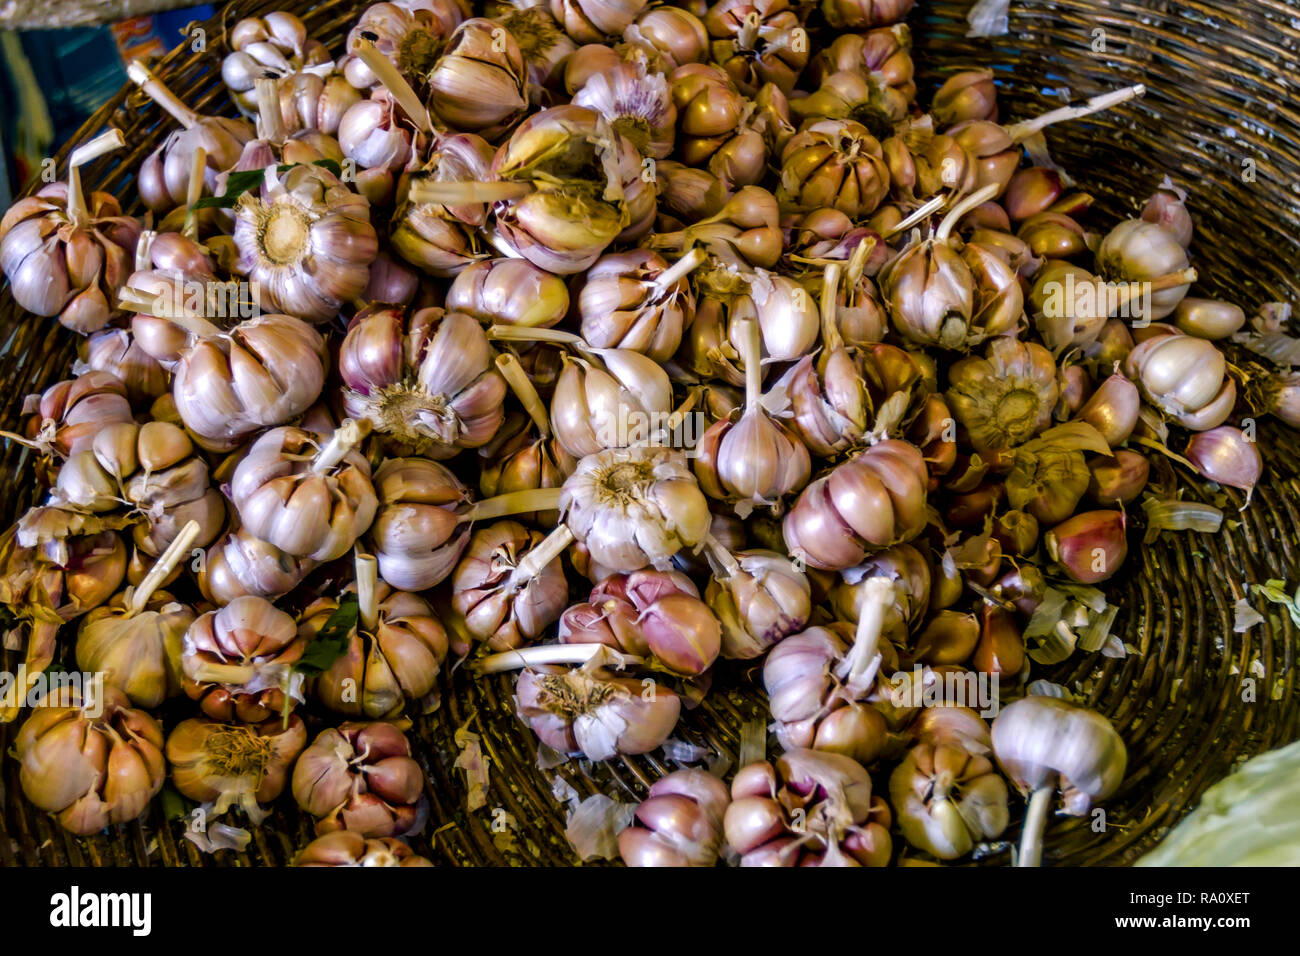 Asian market with garlic bulbs Stock Photo